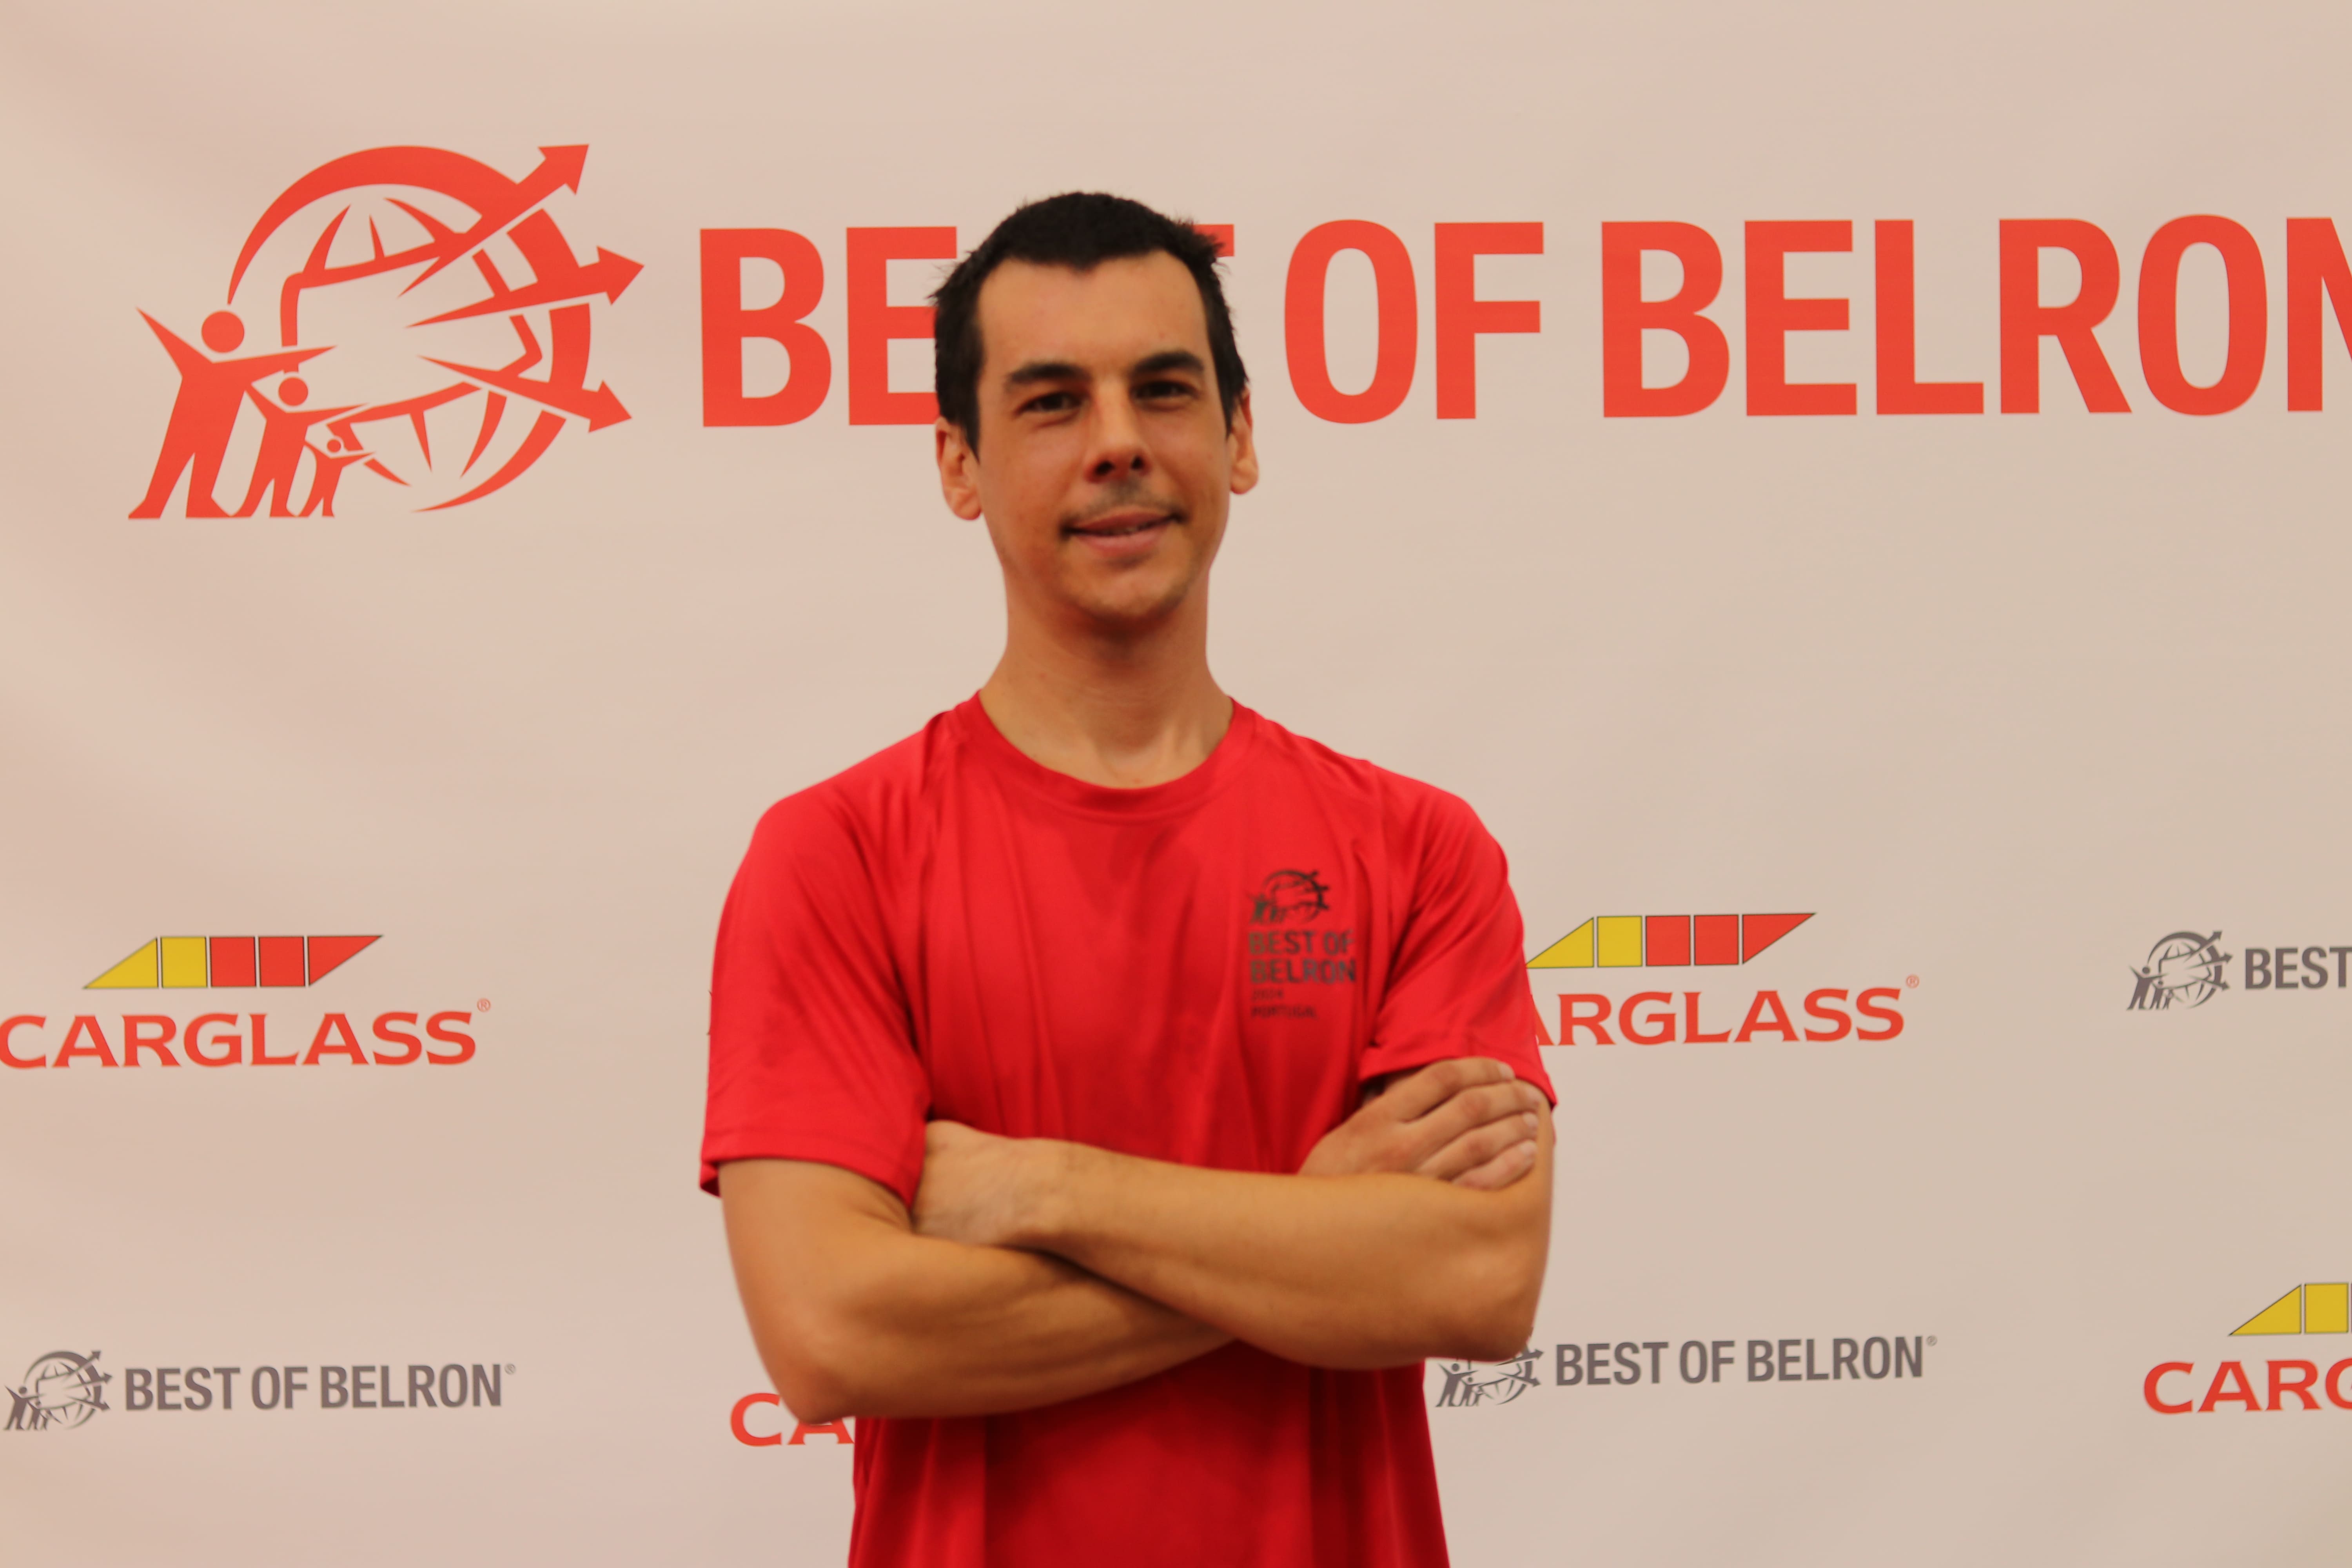 Concursante Best of Belron - Carglass